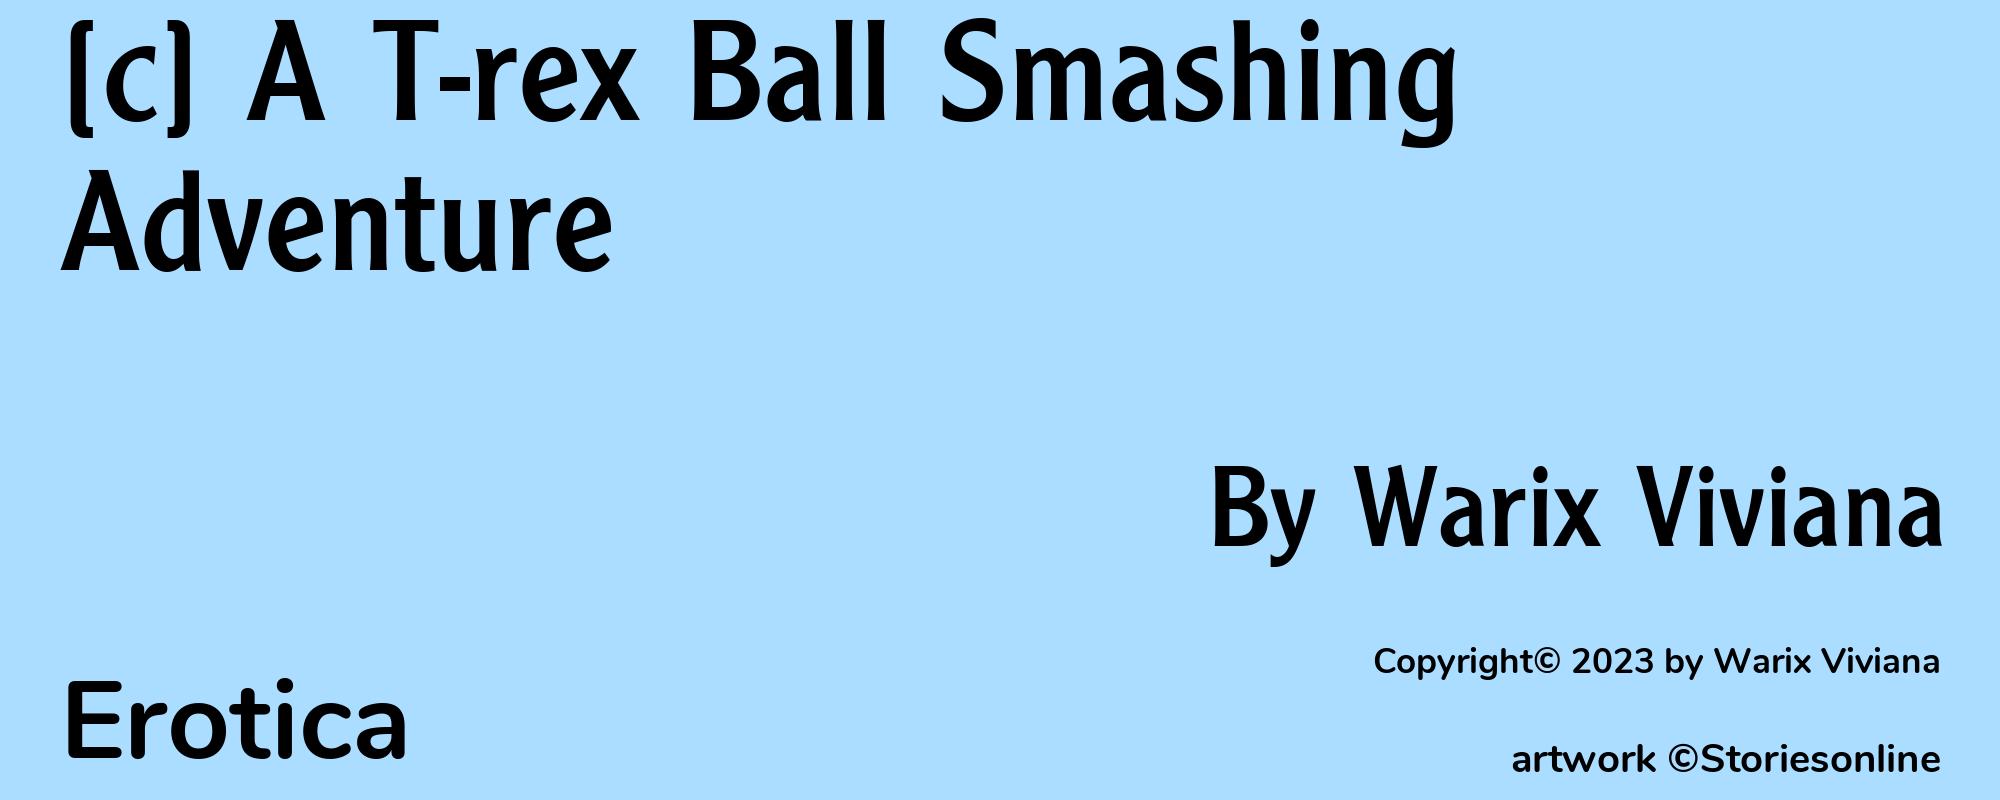 [c] A T-rex Ball Smashing Adventure - Cover